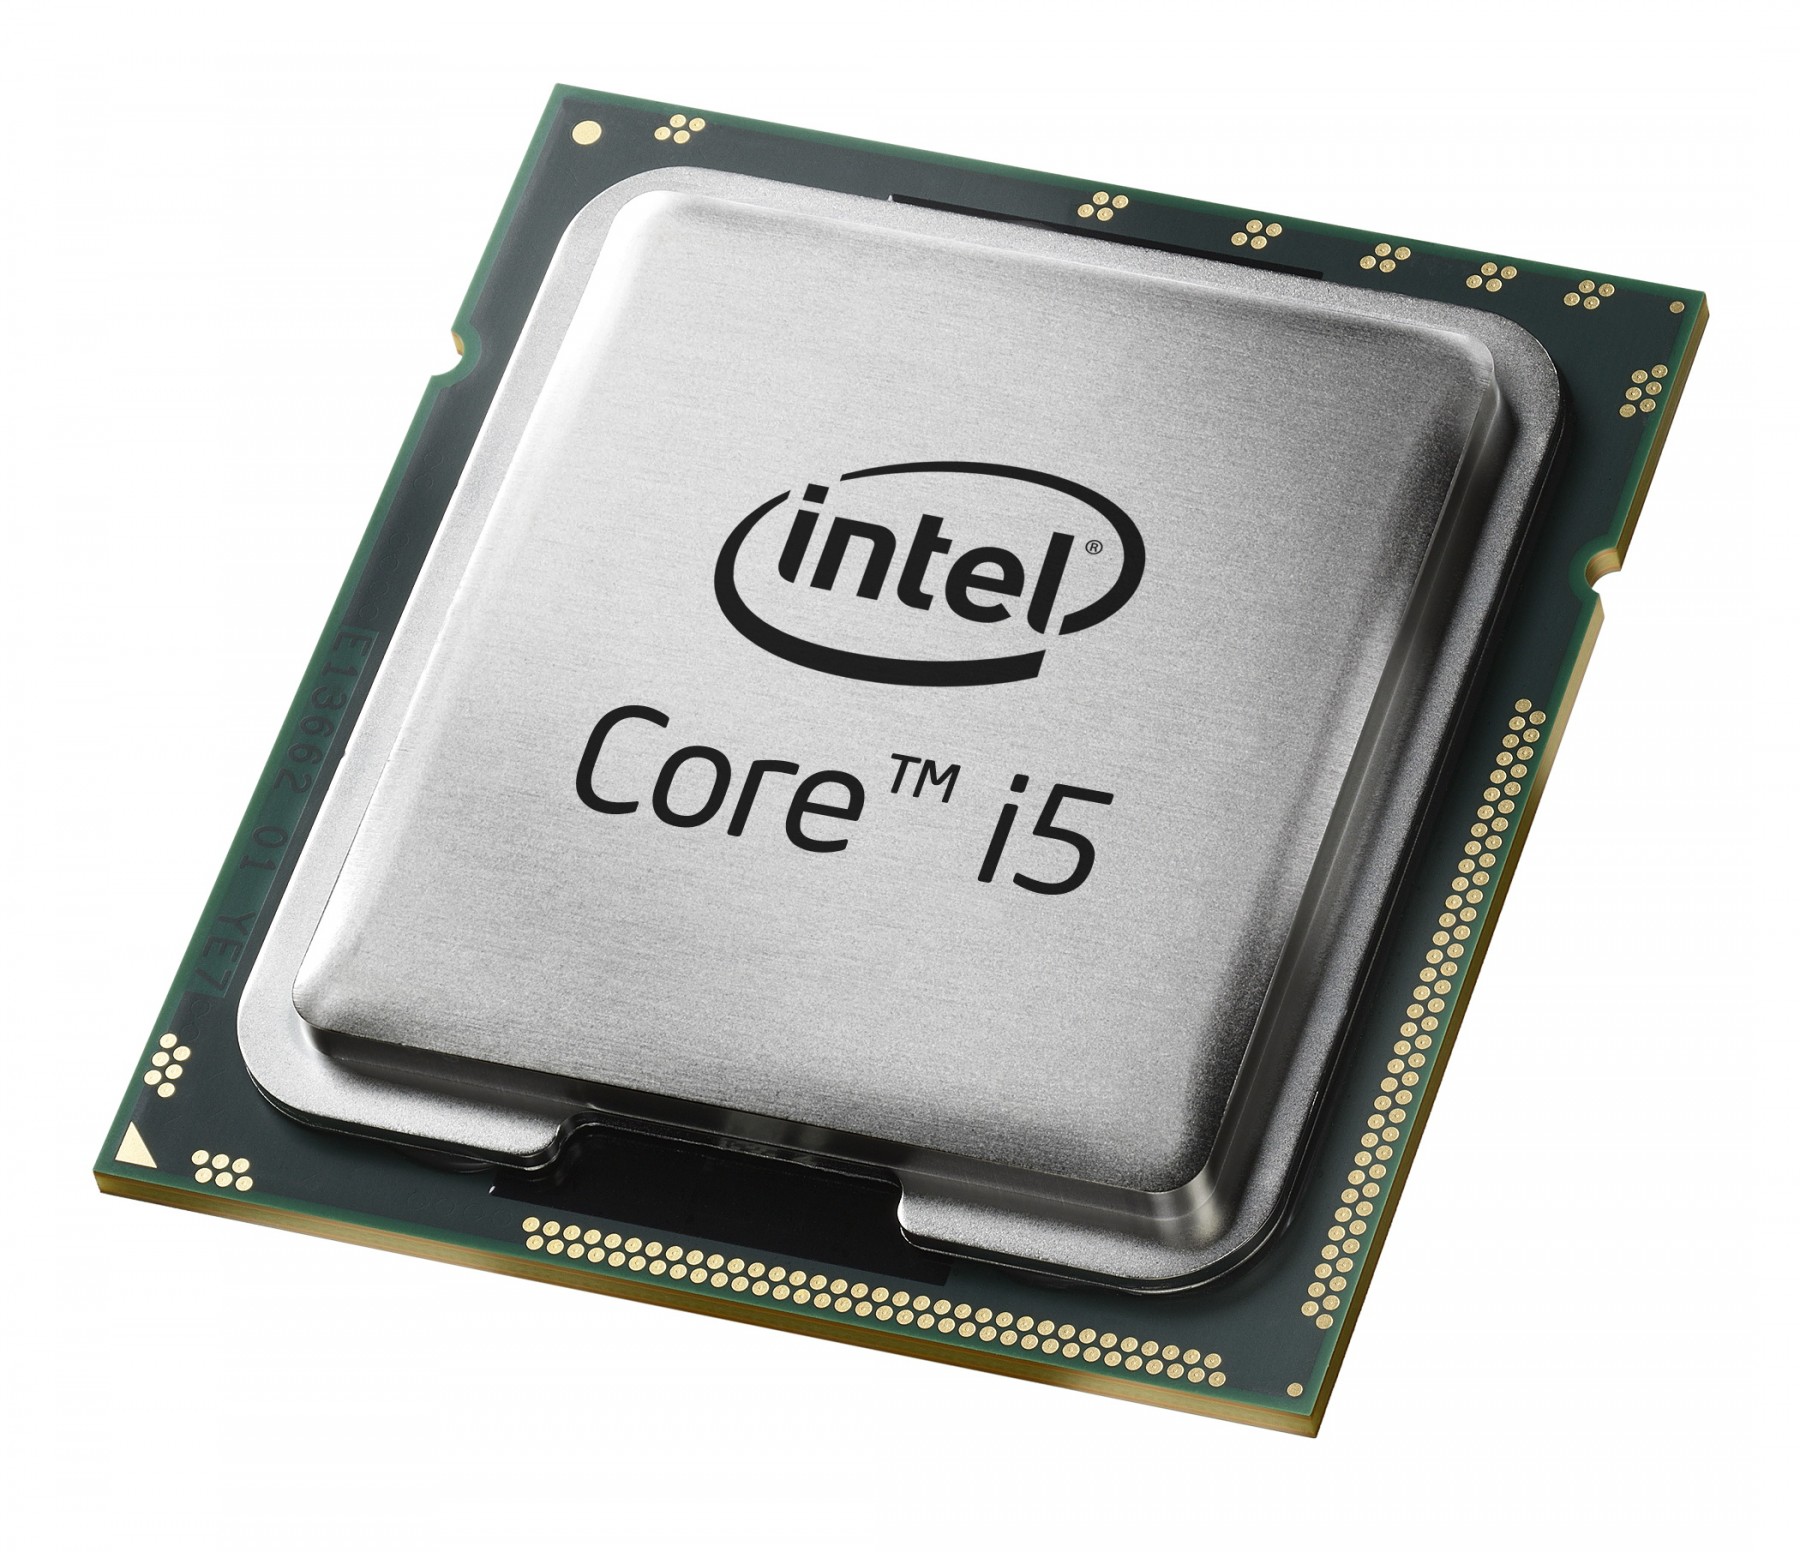 500030026-Intel Core i5-660 SLBLV 3.3Ghz 2.5GT/s LGA 1156 Processor-image